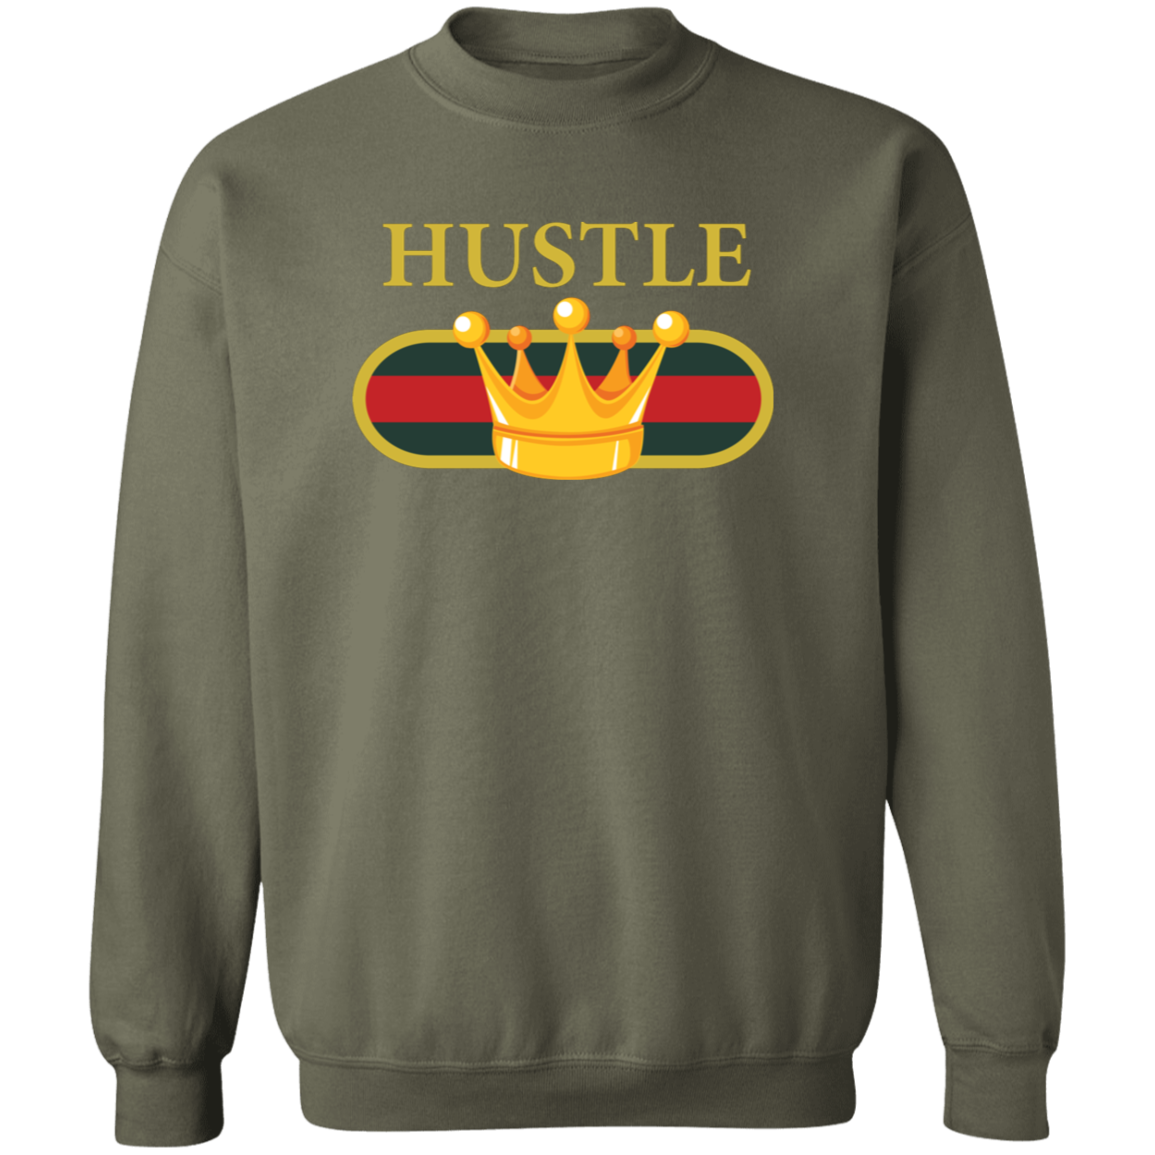 Crown Hustle Premium Crewneck Pullover Sweatshirt - Hustle Everything